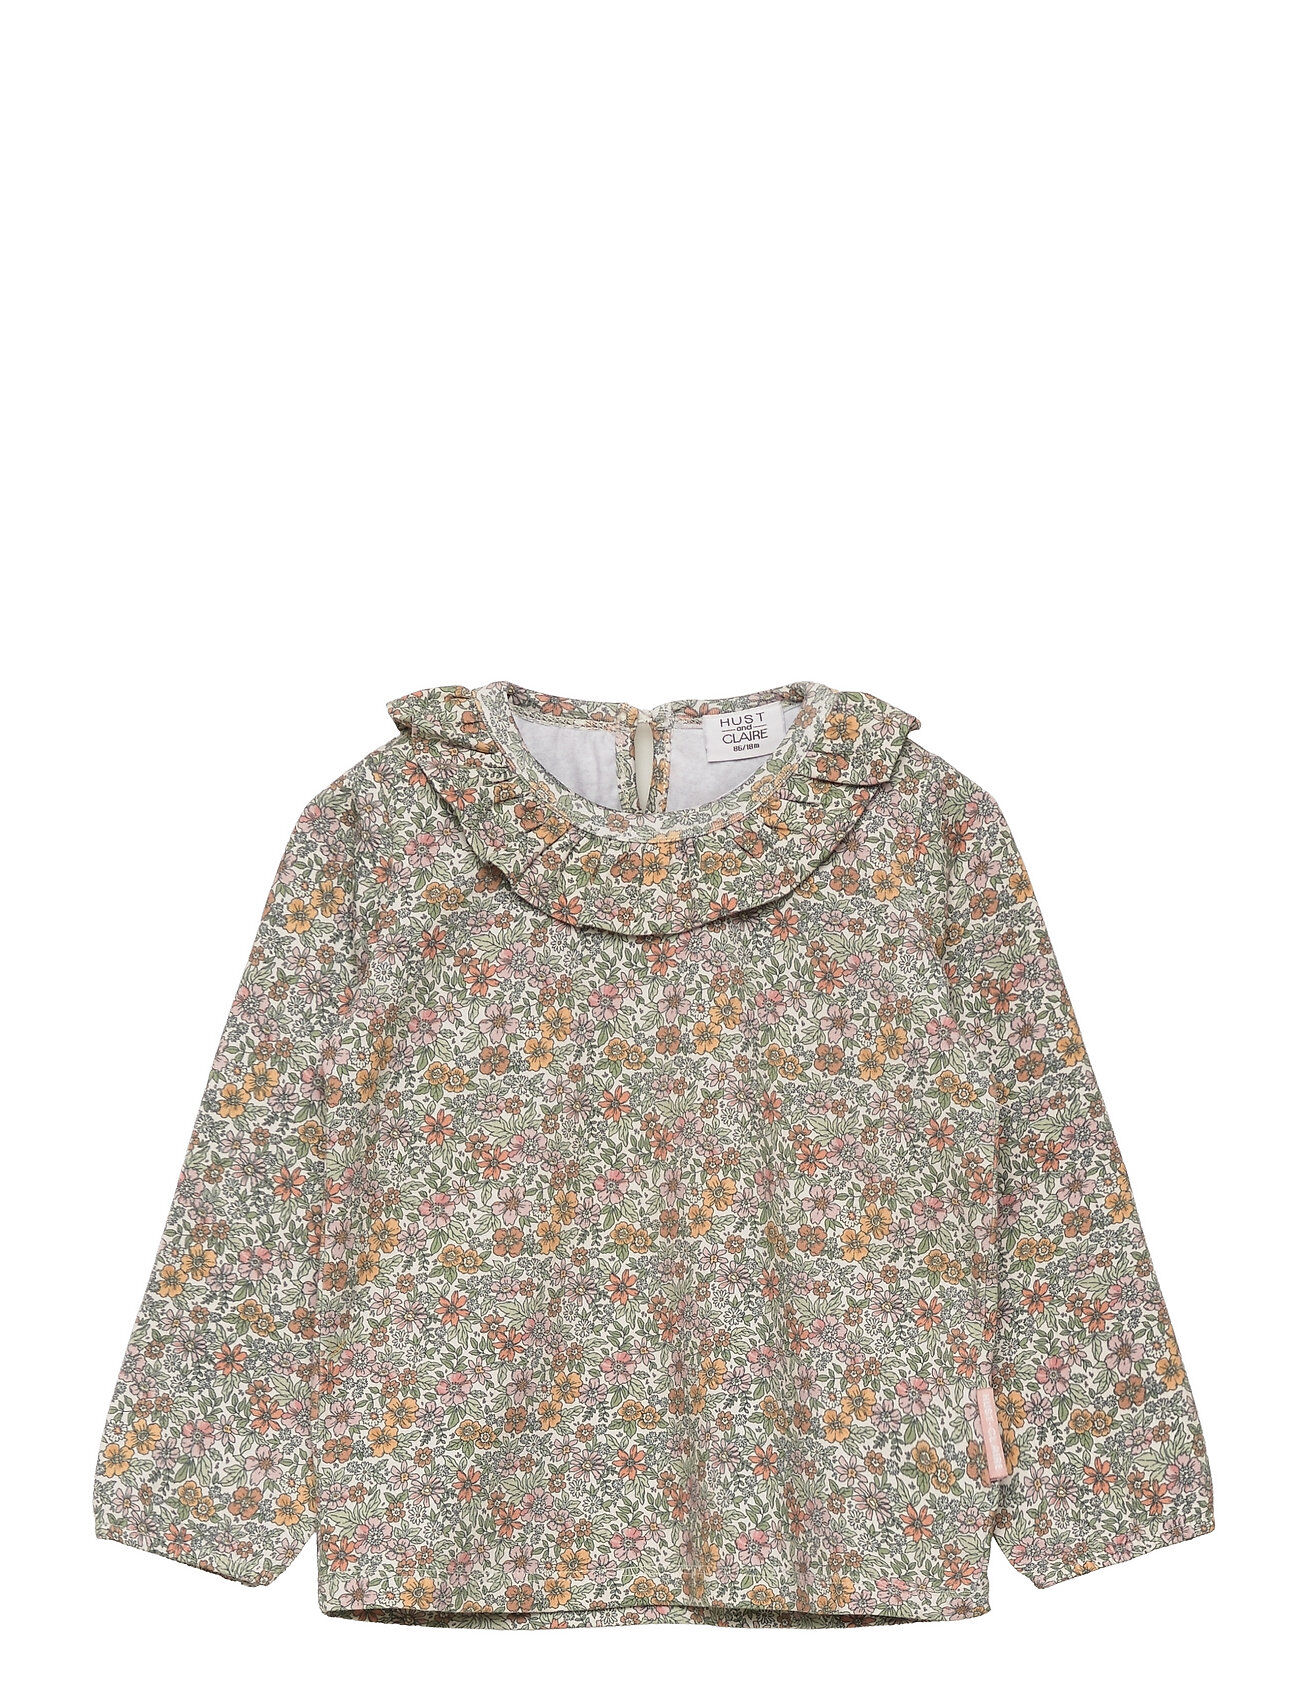 Hust & Claire Abriz - T-Shirt Bluse Tunika Multi/mønstret Hust & Claire